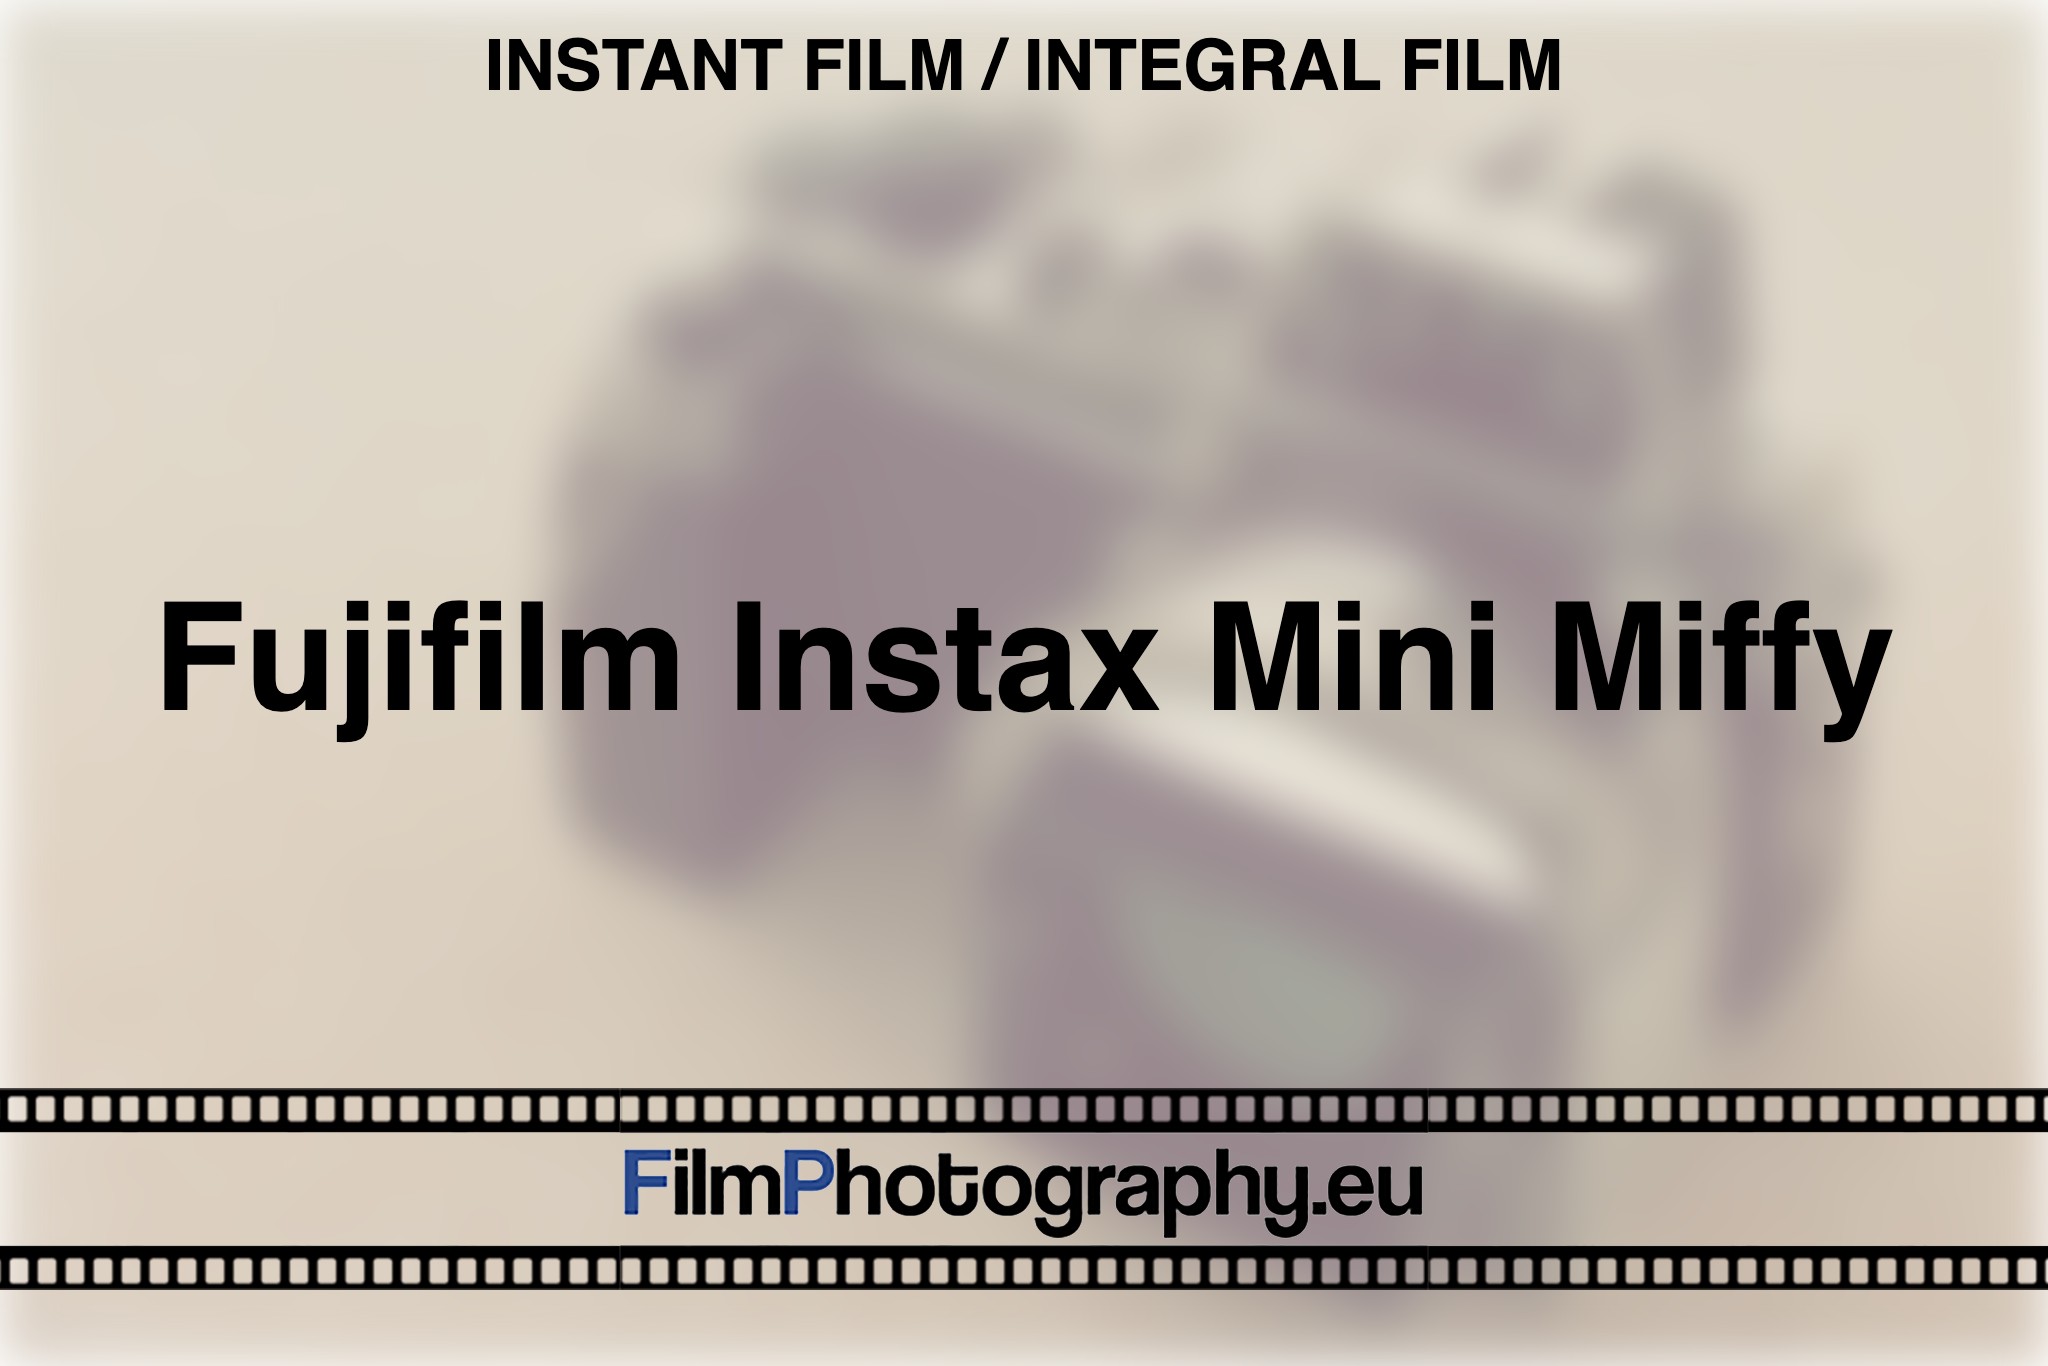 fujifilm-instax-mini-miffy-instant-film-integral-film-bnv